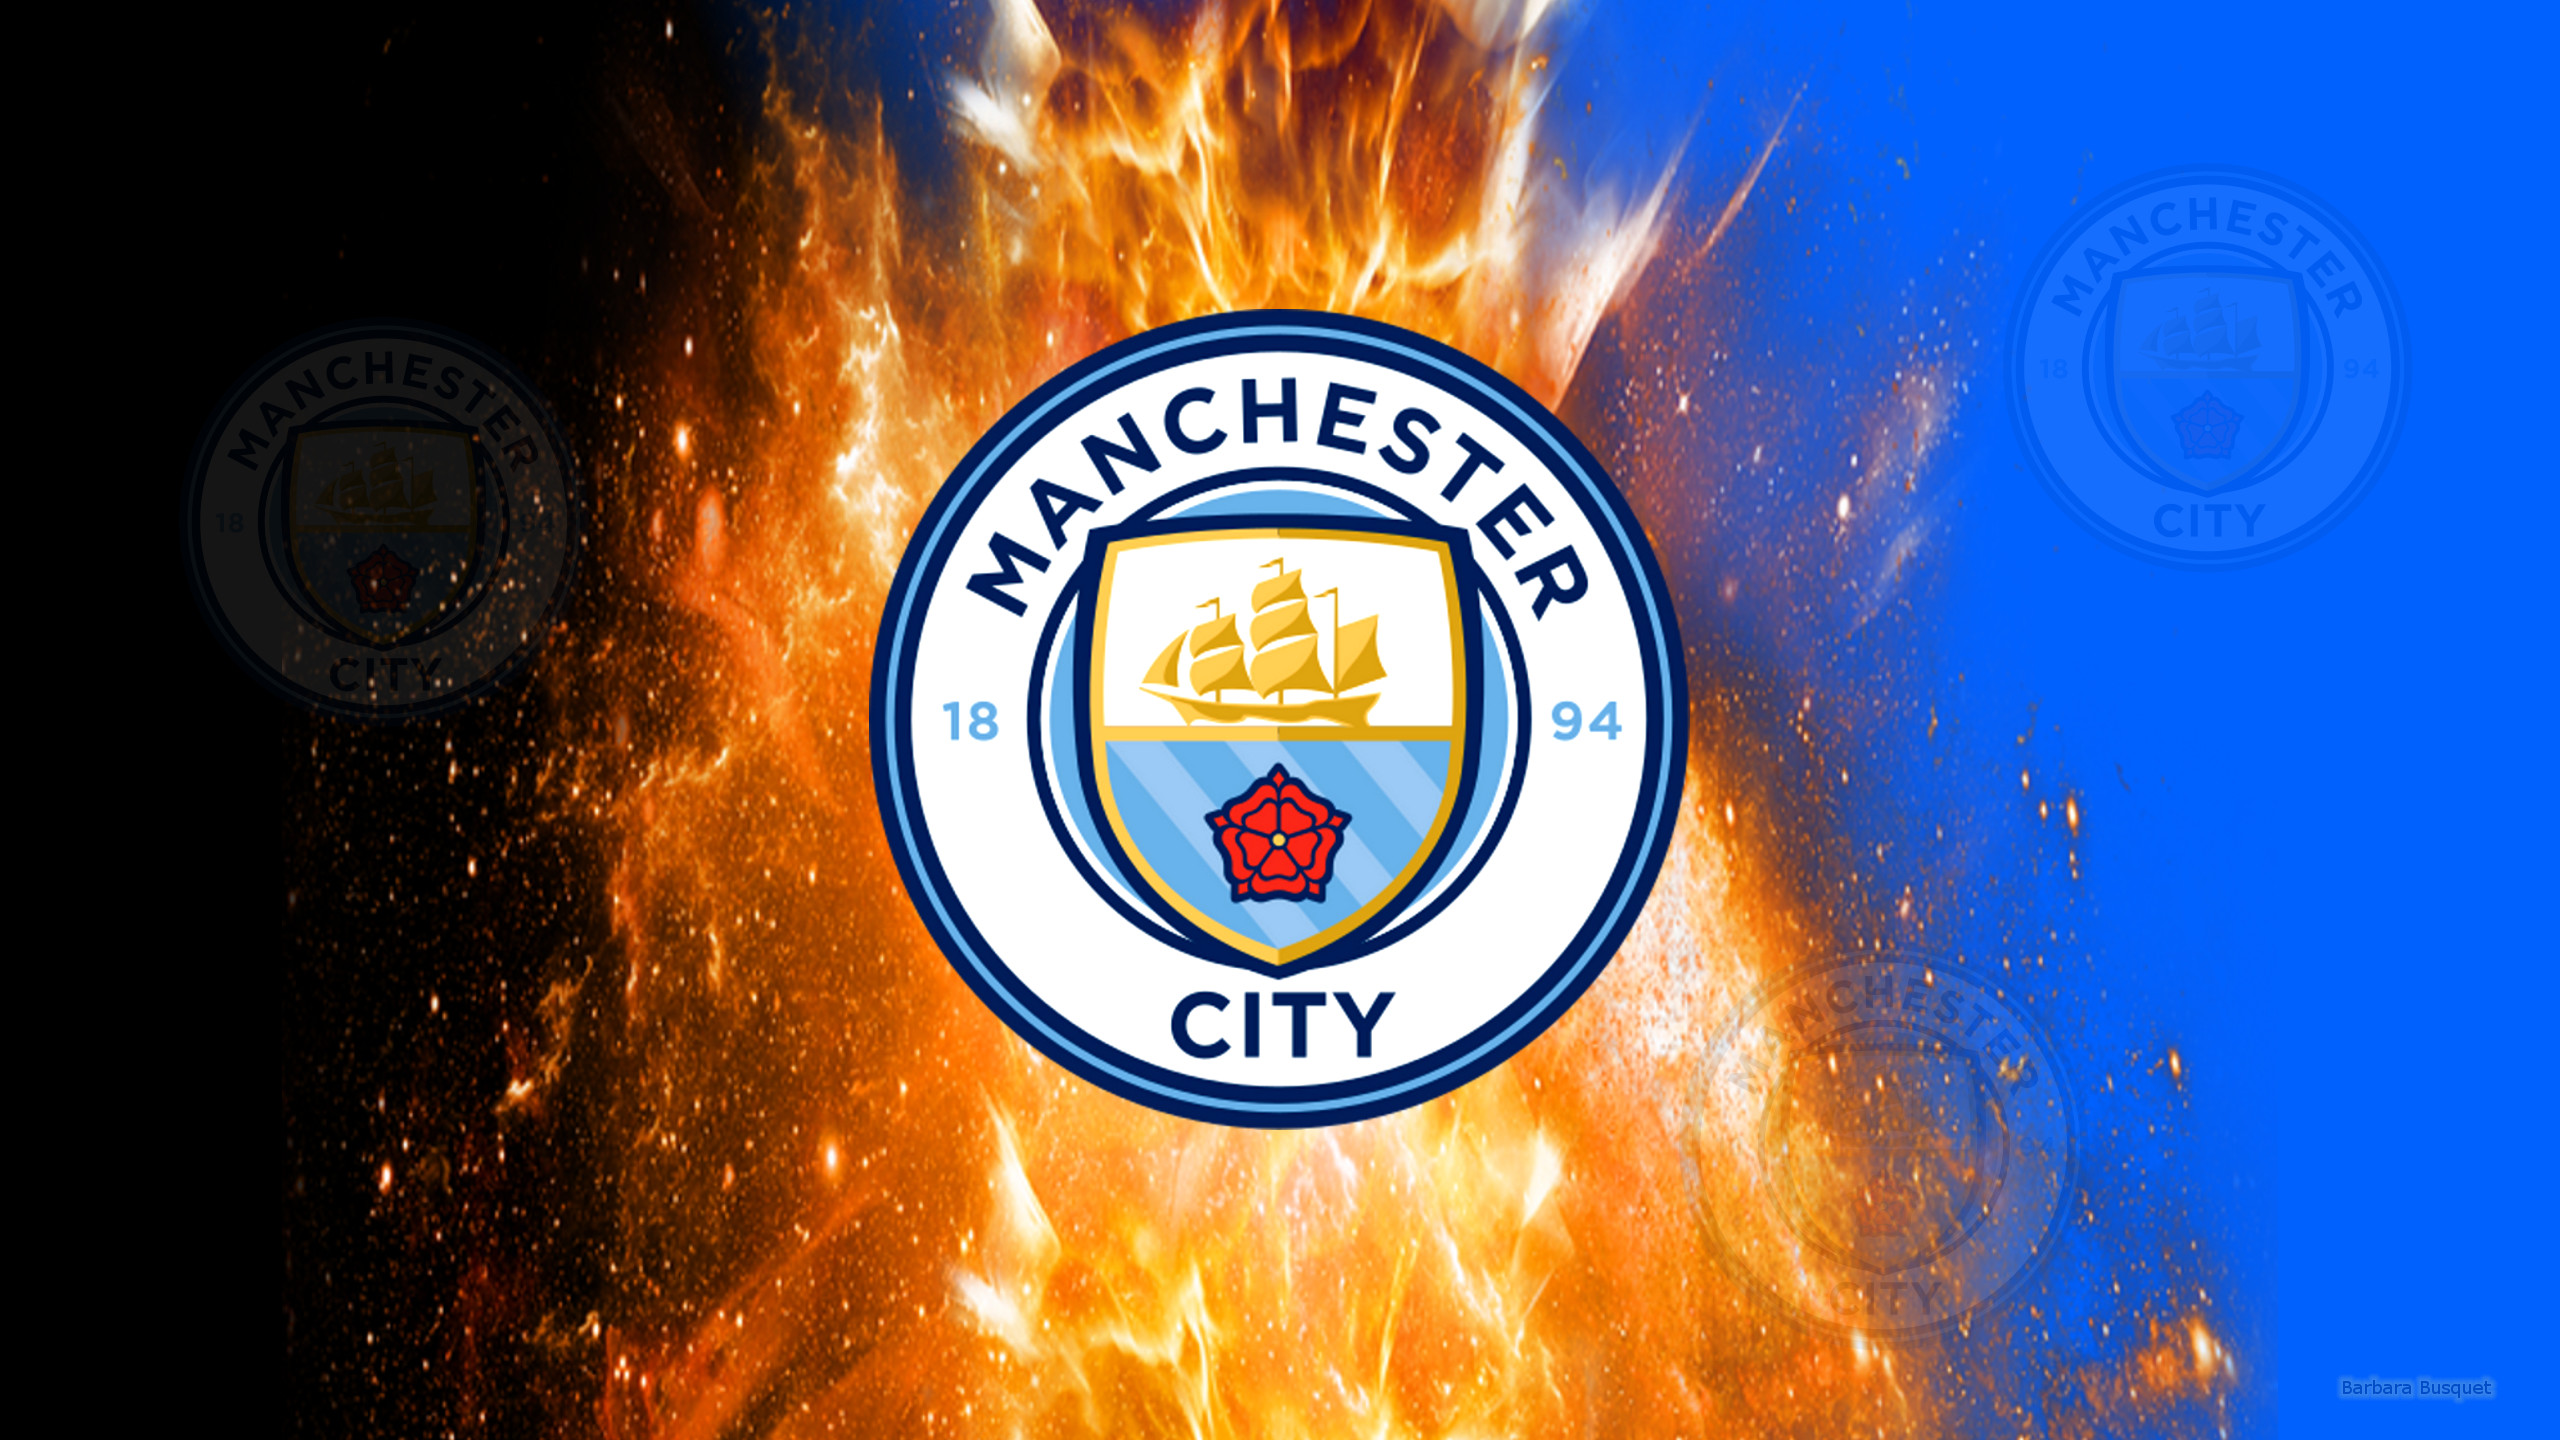 75+ Manchester City Logo Wallpaper on WallpaperSafari